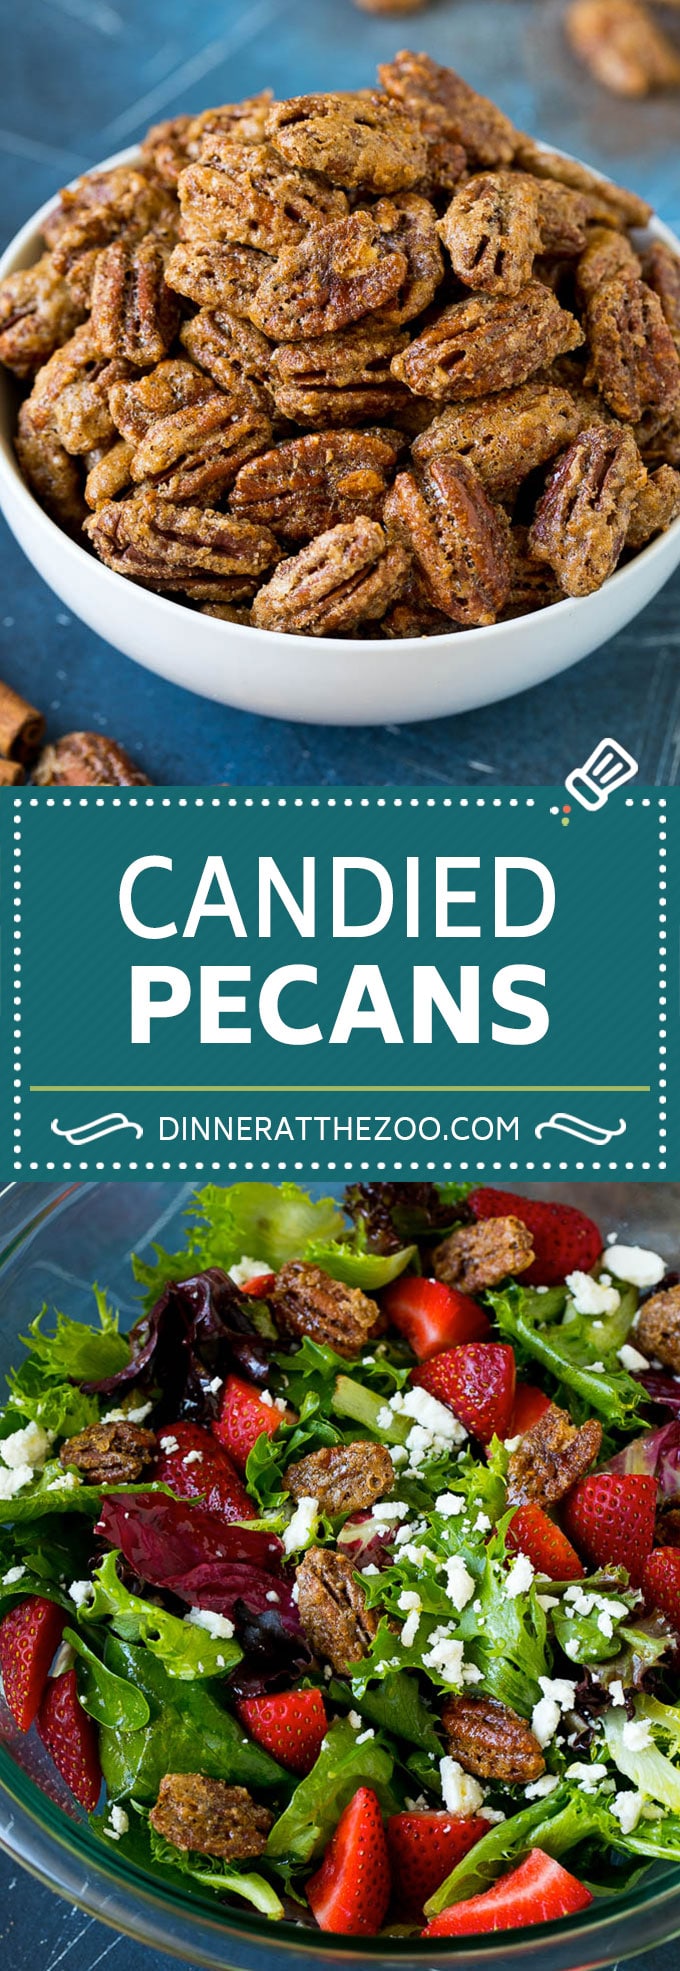 Candied Pecans Recipe | Glazed Pecans | Sugared Pecans #pecans #nuts #snack #dessert #dinneratthezoo